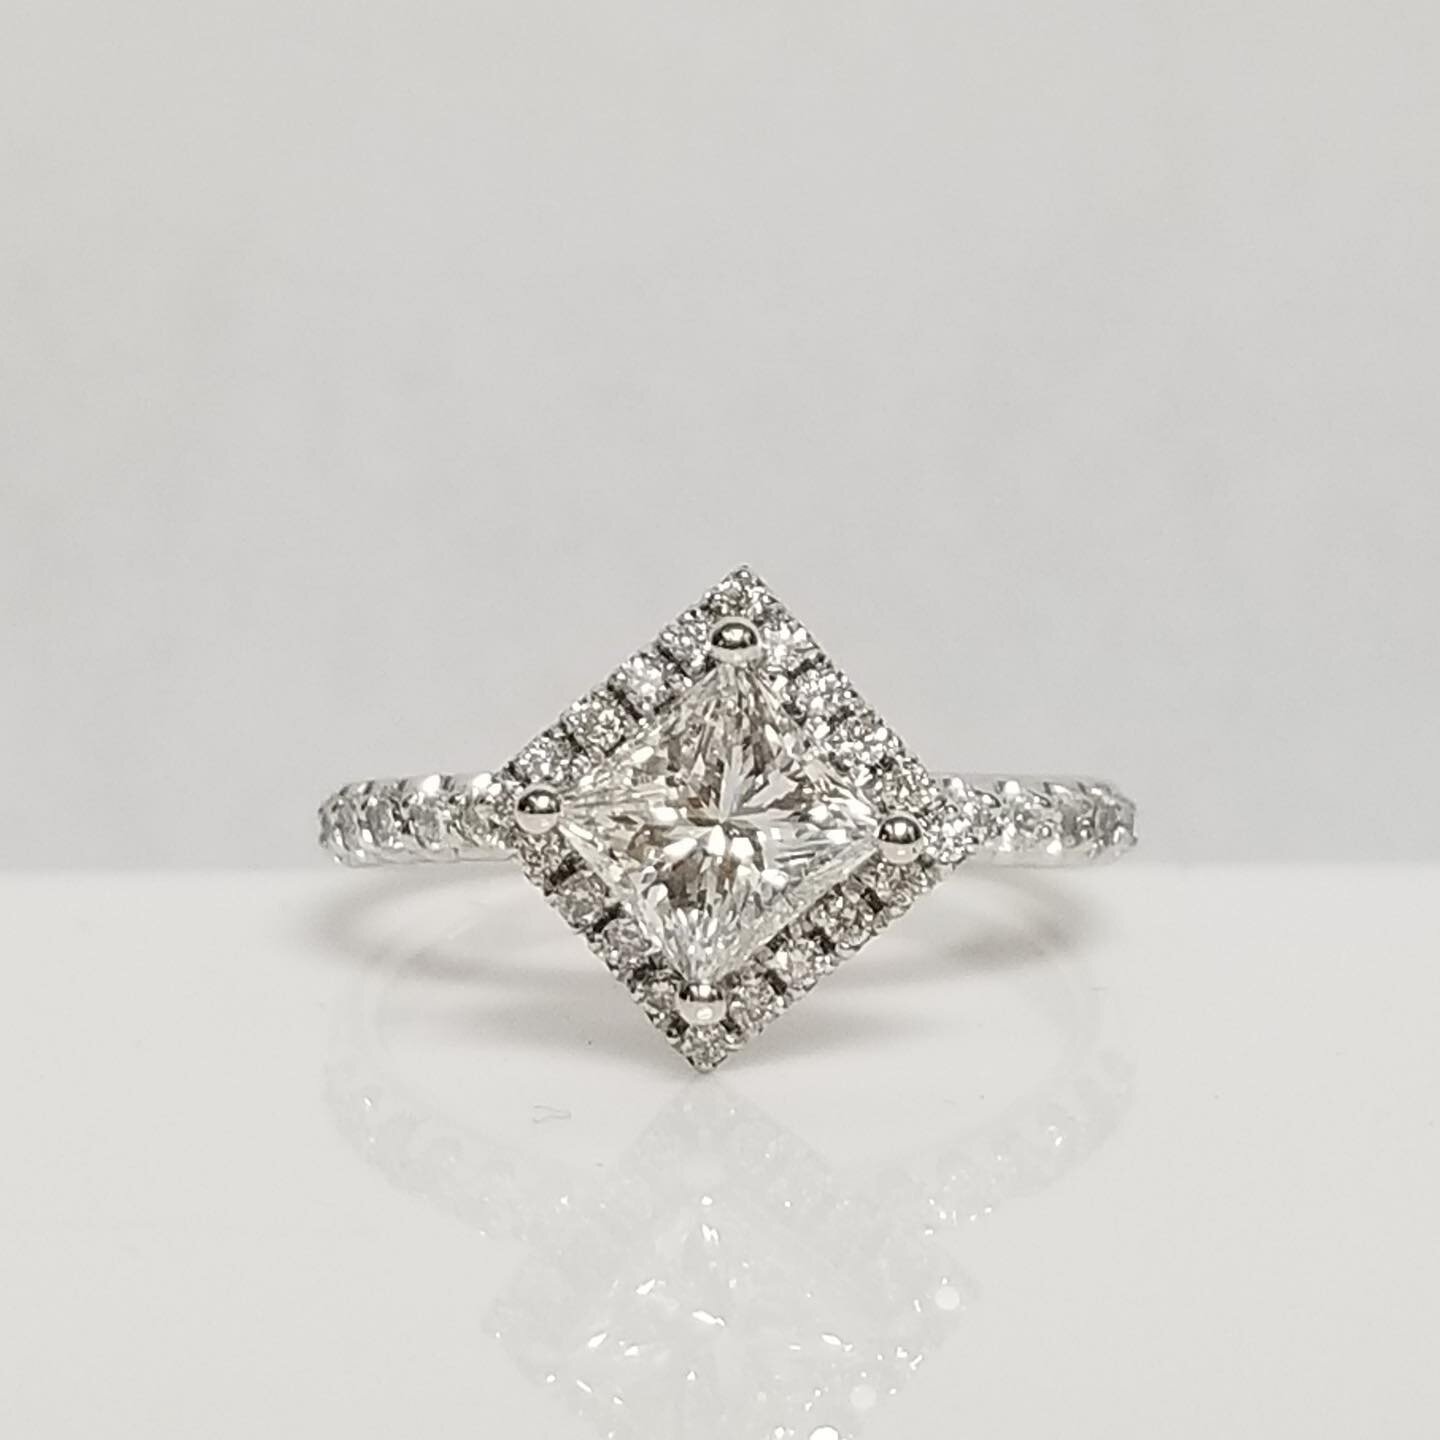 Modern twists on princess cut diamonds! 💍
-
-
-
#engagementring #princesscut #modernengagementring #theknot #goldanddiamonds